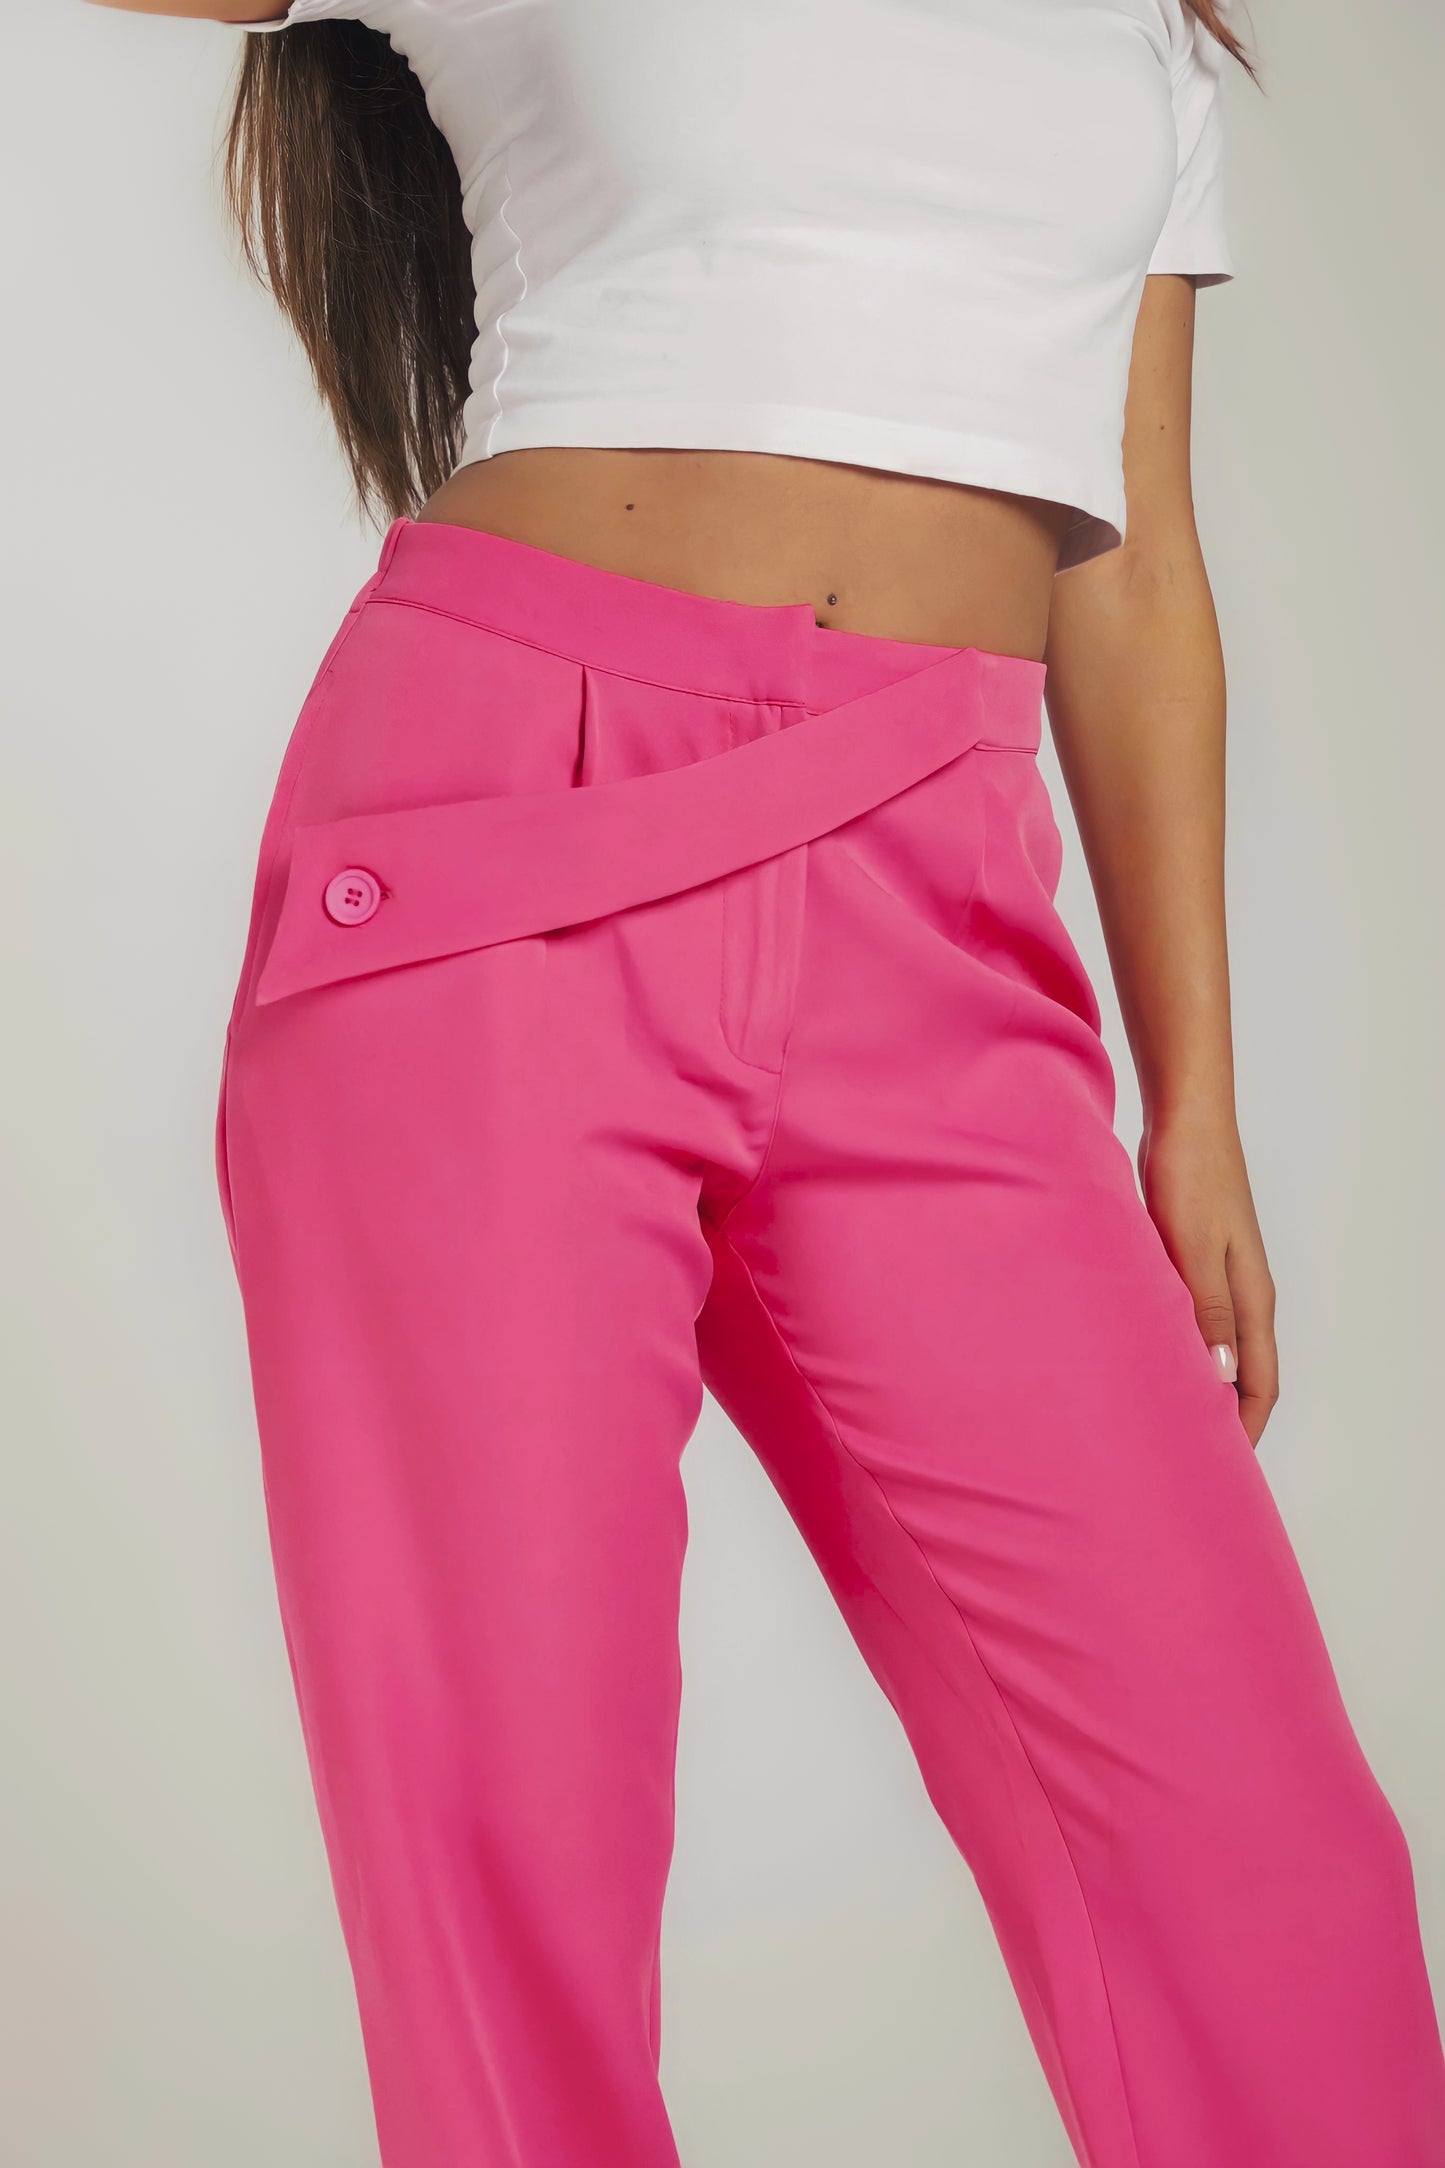 Asymmetrical Pants In Pink